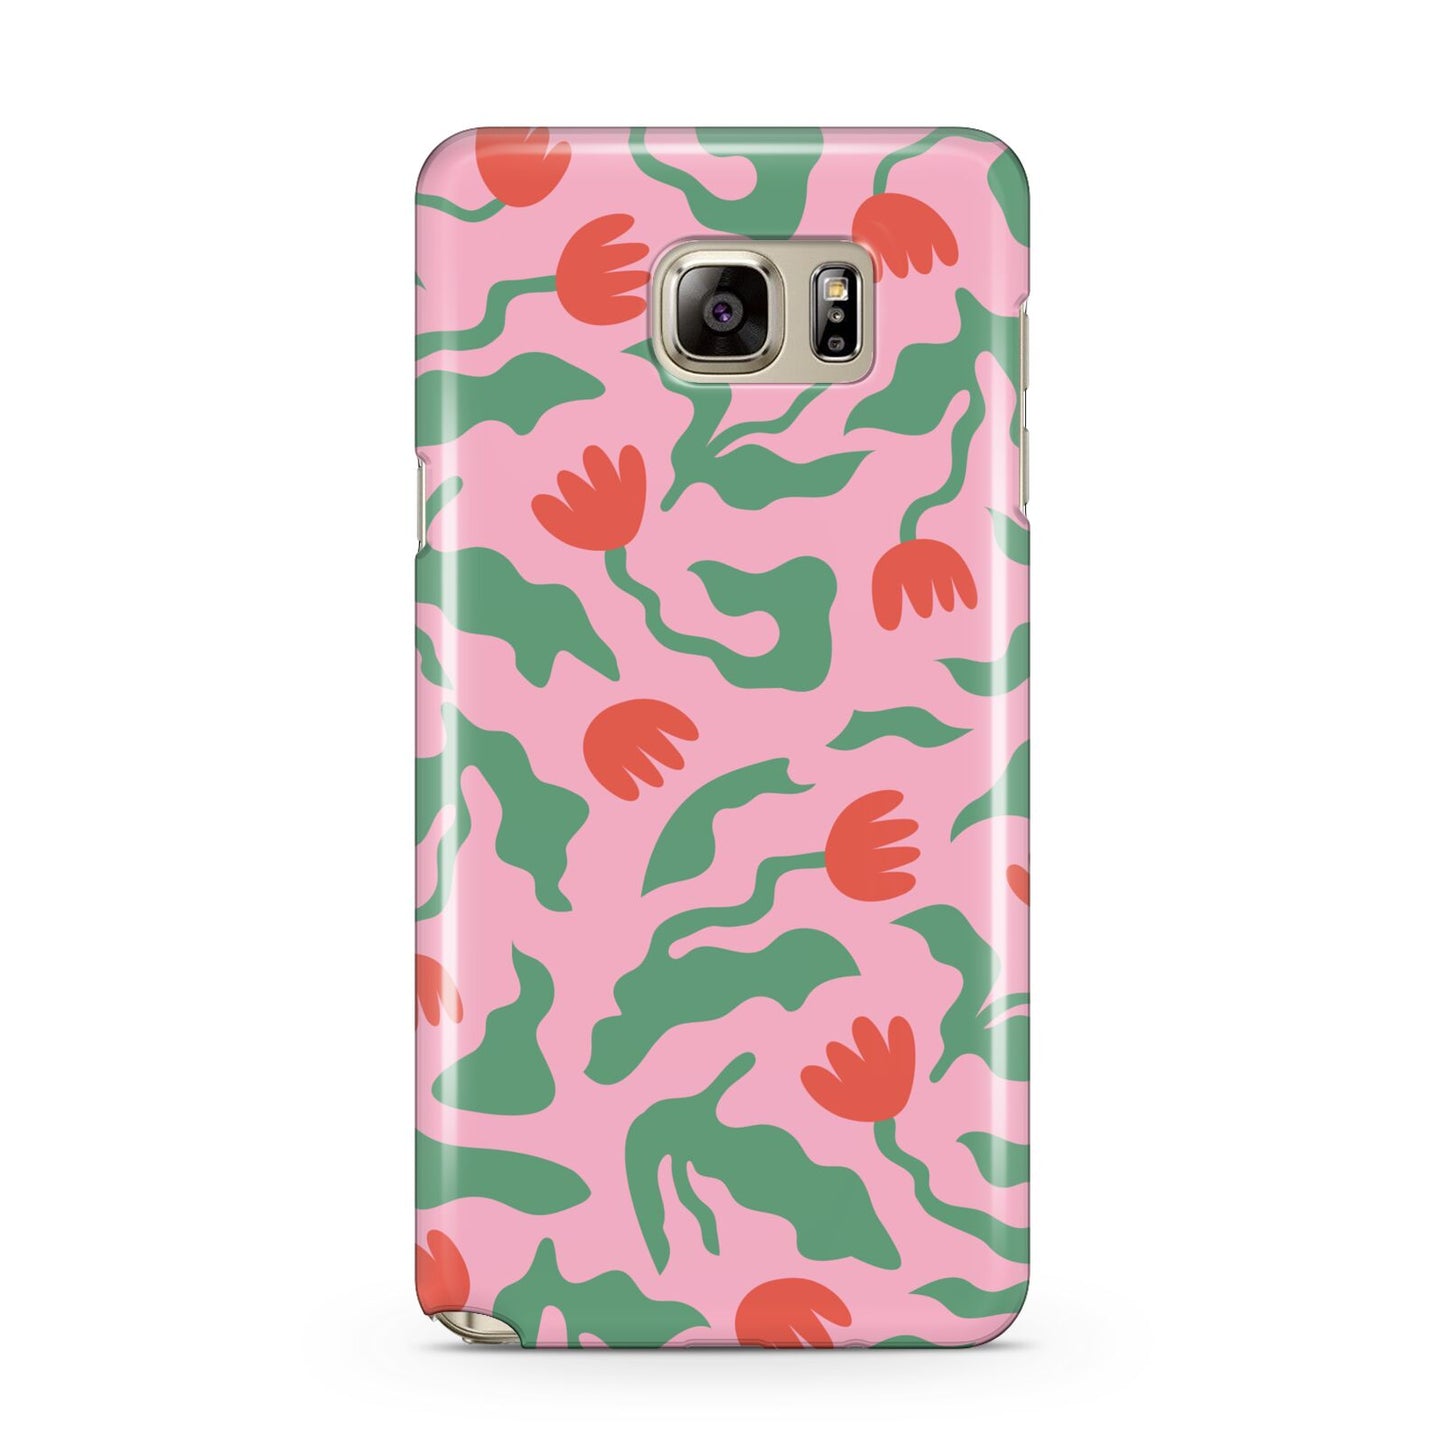 Simple Floral Samsung Galaxy Note 5 Case